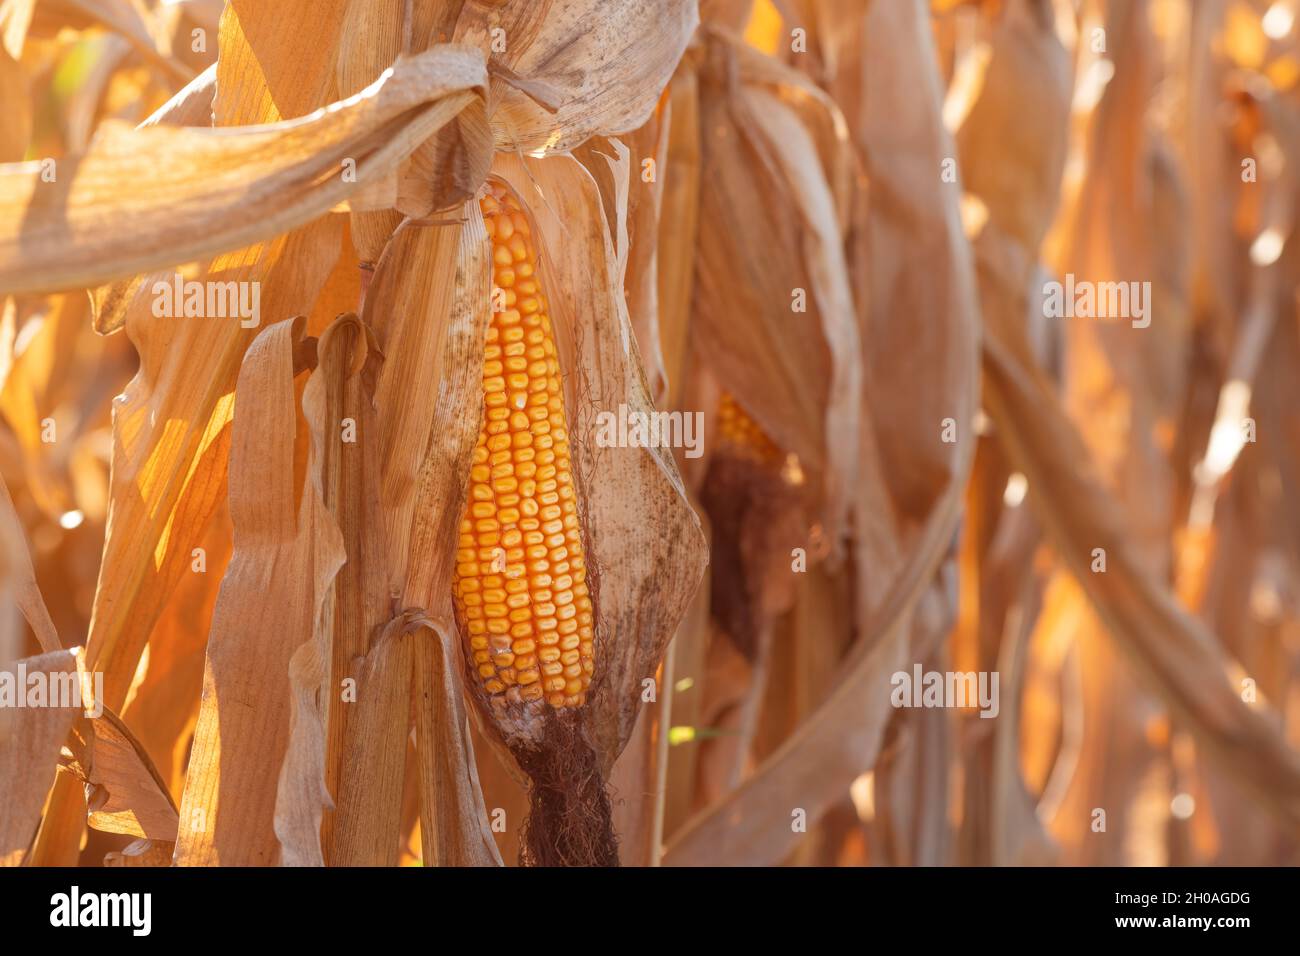 Fusarium corn ear rot damage. most common maize disease, selective focus Stock Photo